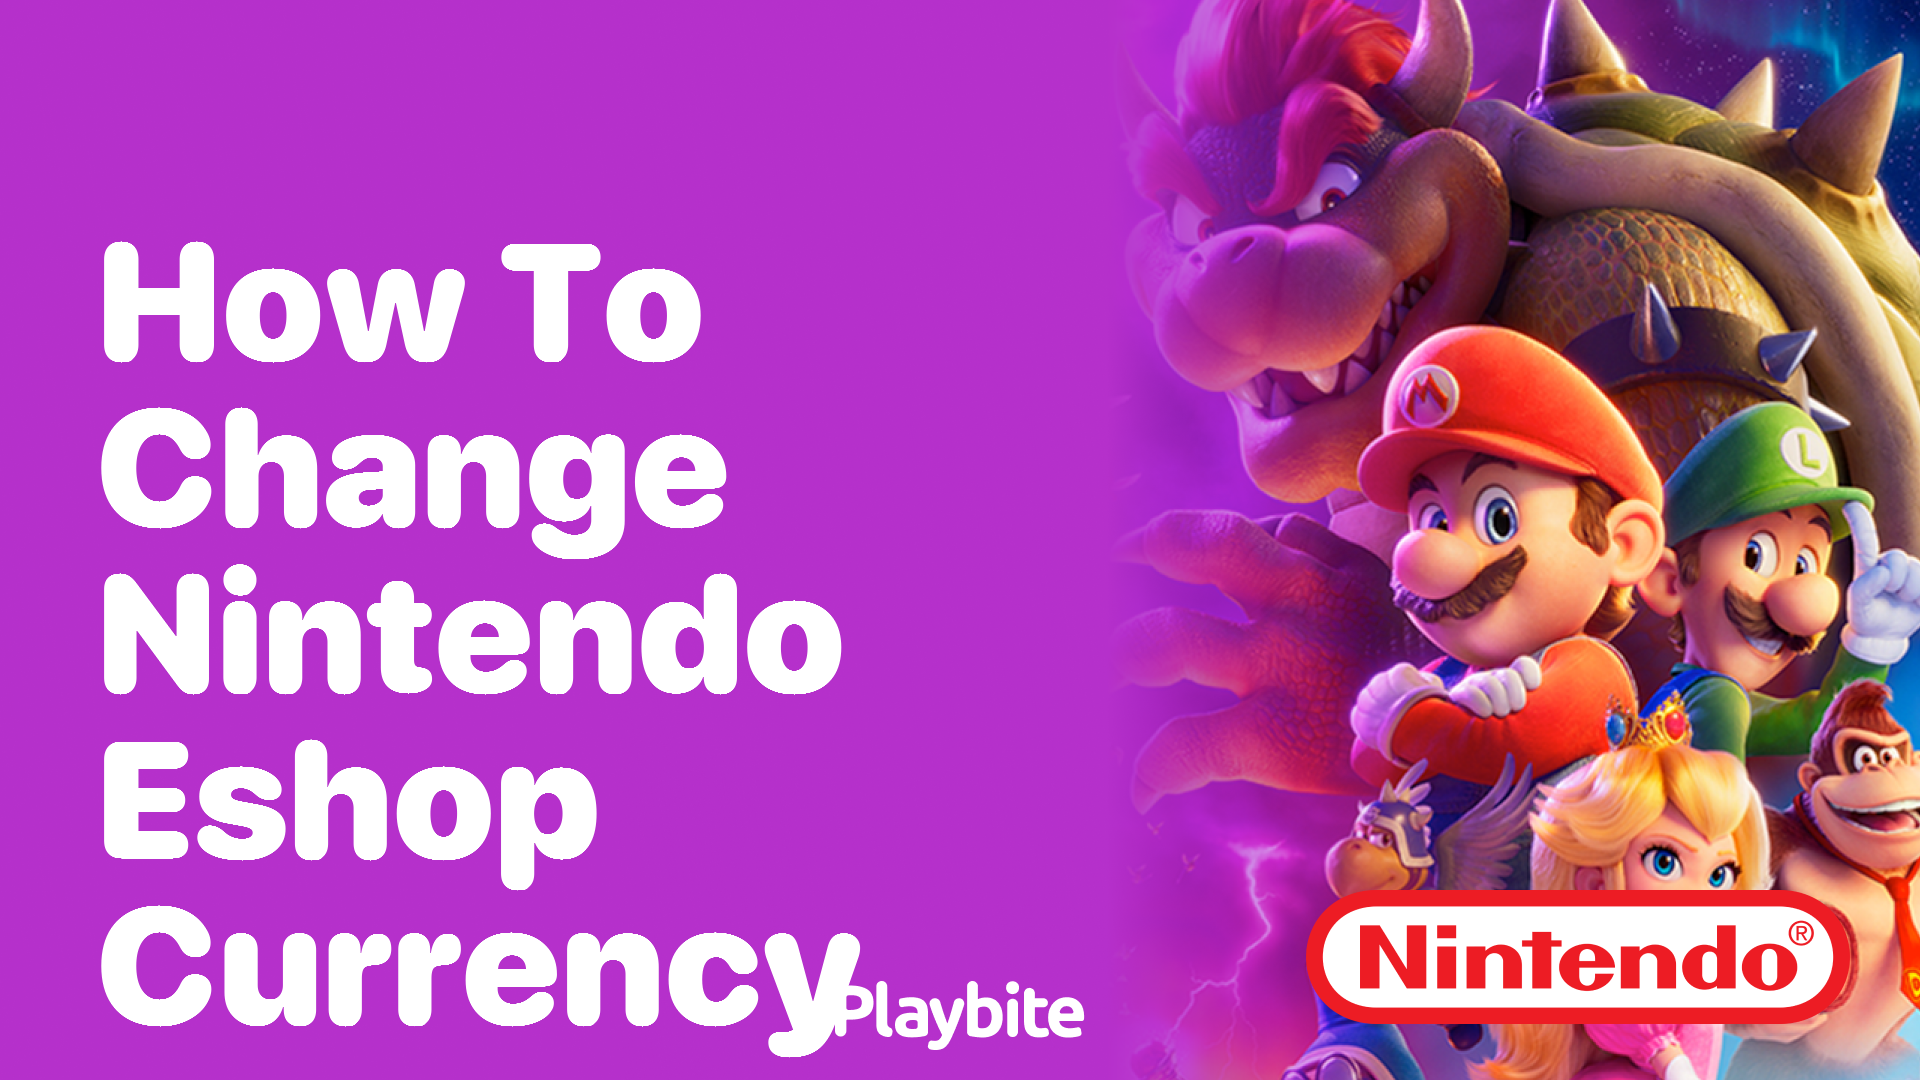 How to Change Nintendo eShop Currency